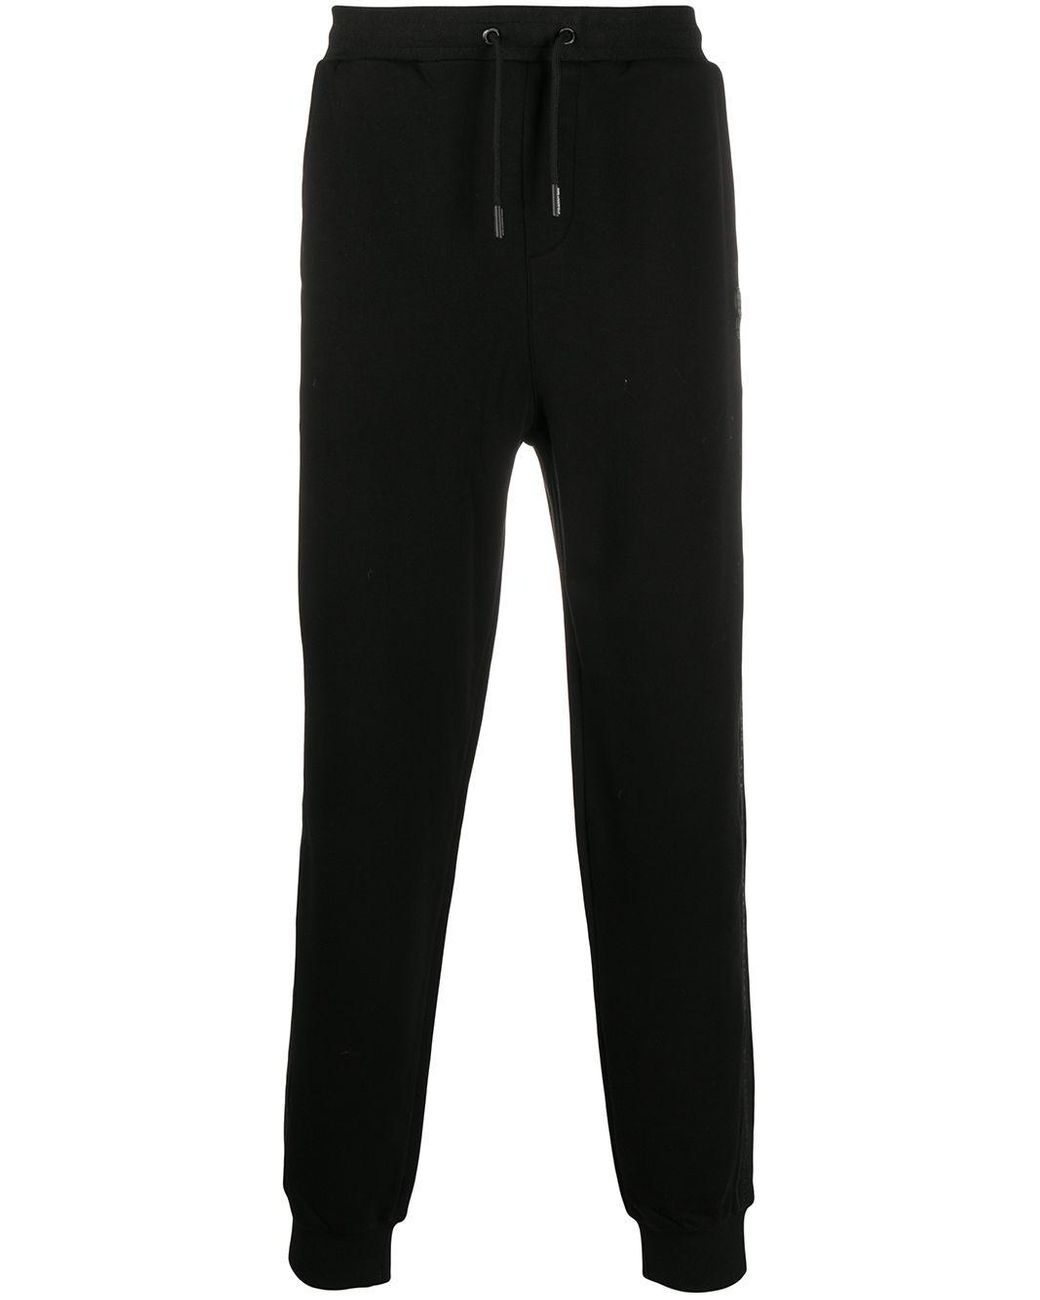 Karl Lagerfeld Cotton Black Track Pants for Men - Lyst